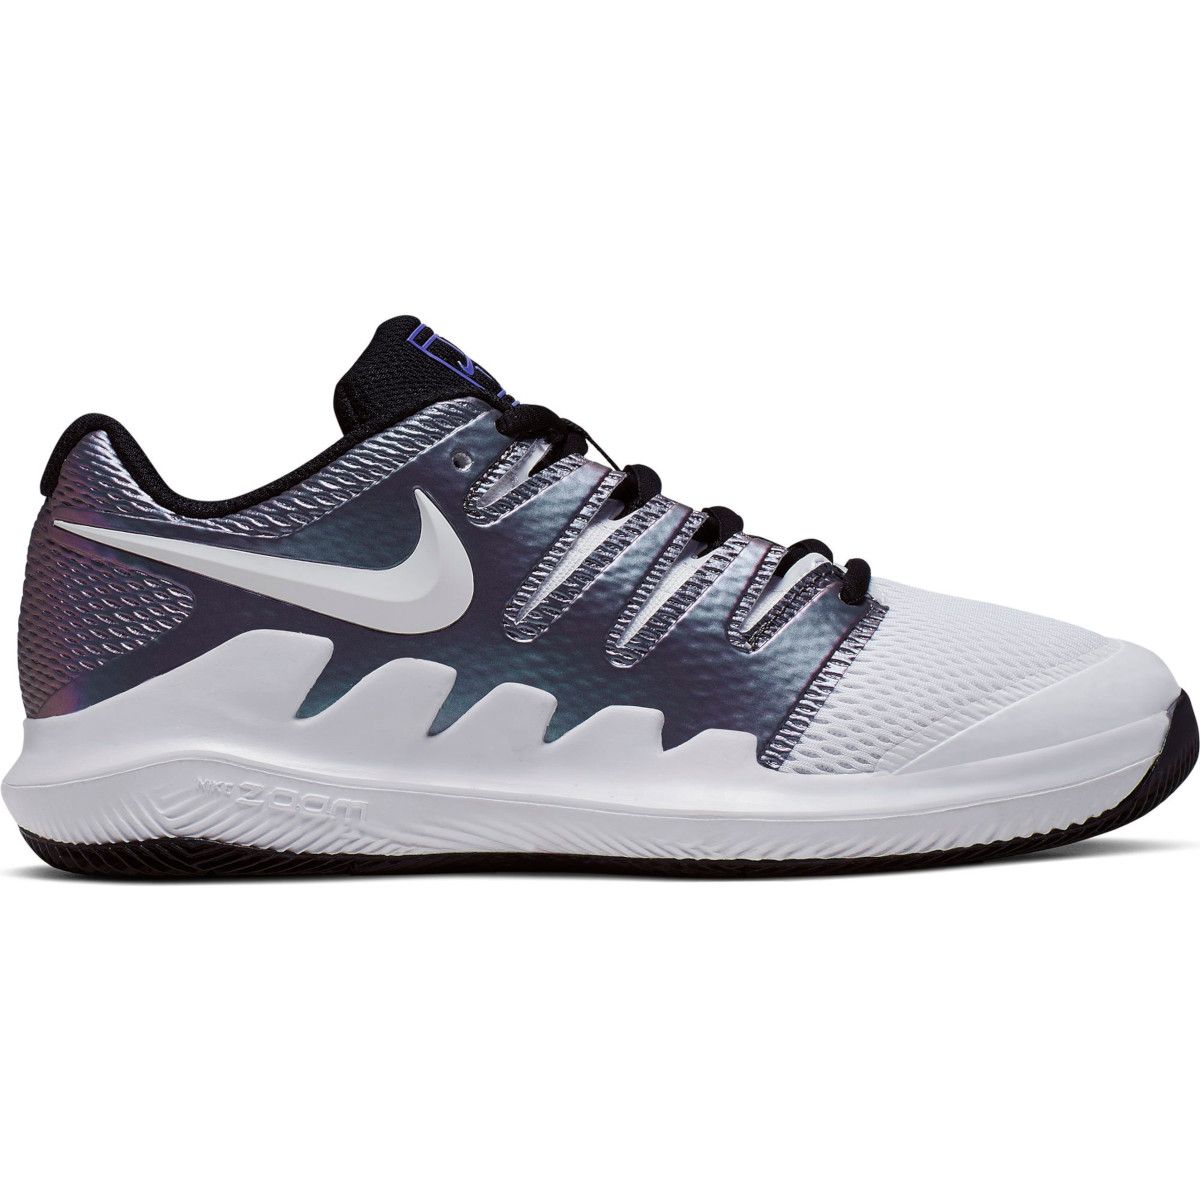 NikeCourt Vapor X Junior Tennis Shoes AR8851-901